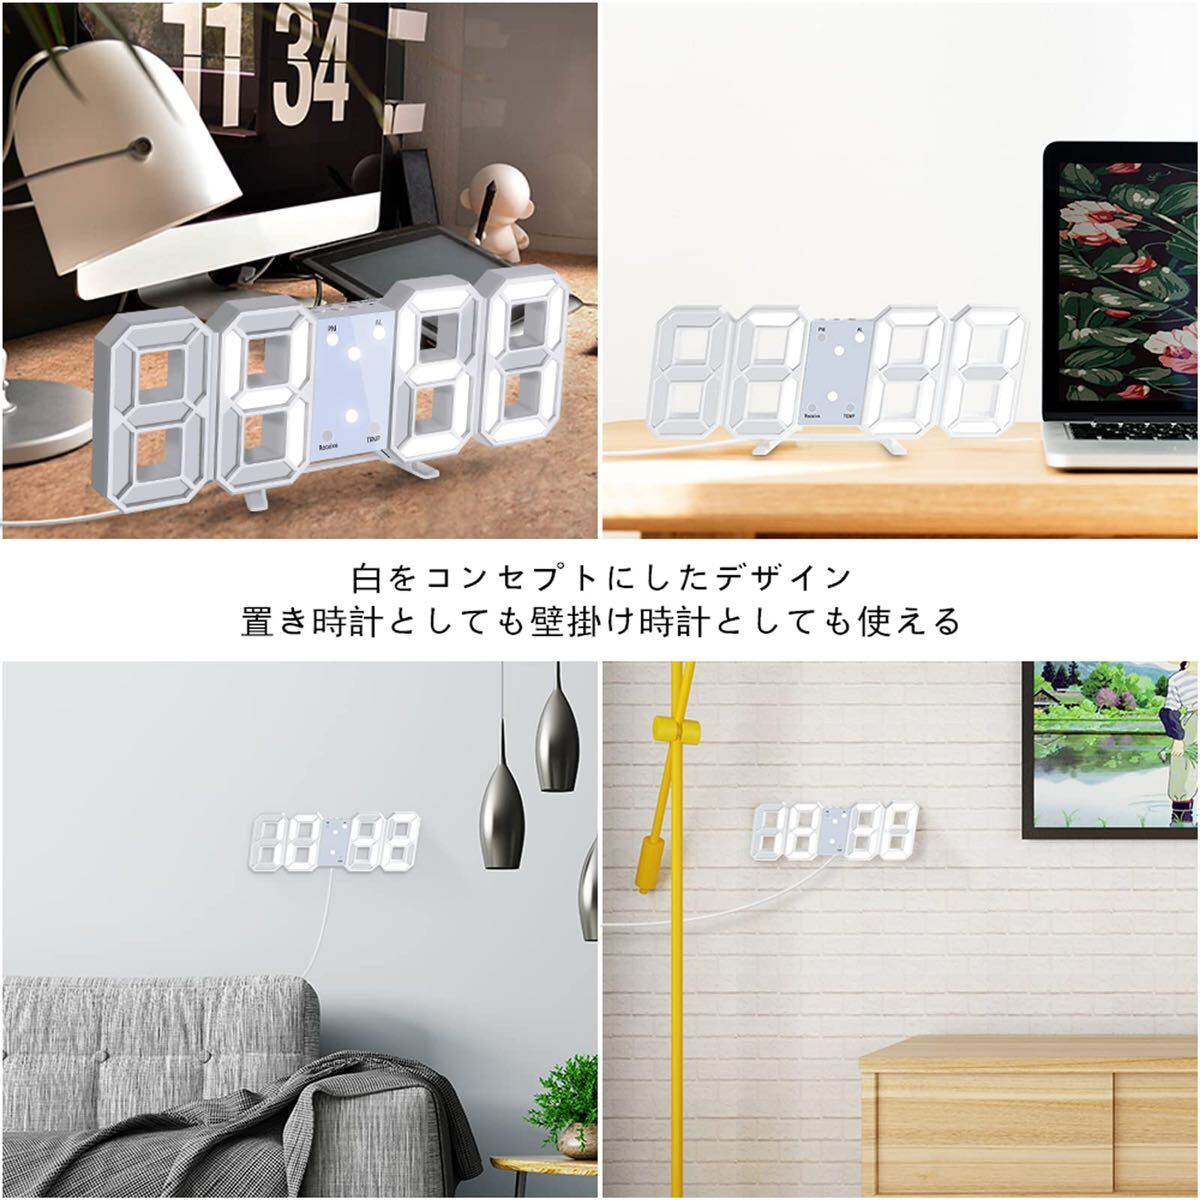 LEDデジタル時計 3Dデザイン アラーム機能付き 置き時計 壁掛け時計 明るさ調整 日本語取扱説明書付き デジタル時計 (ホワイト)_画像4